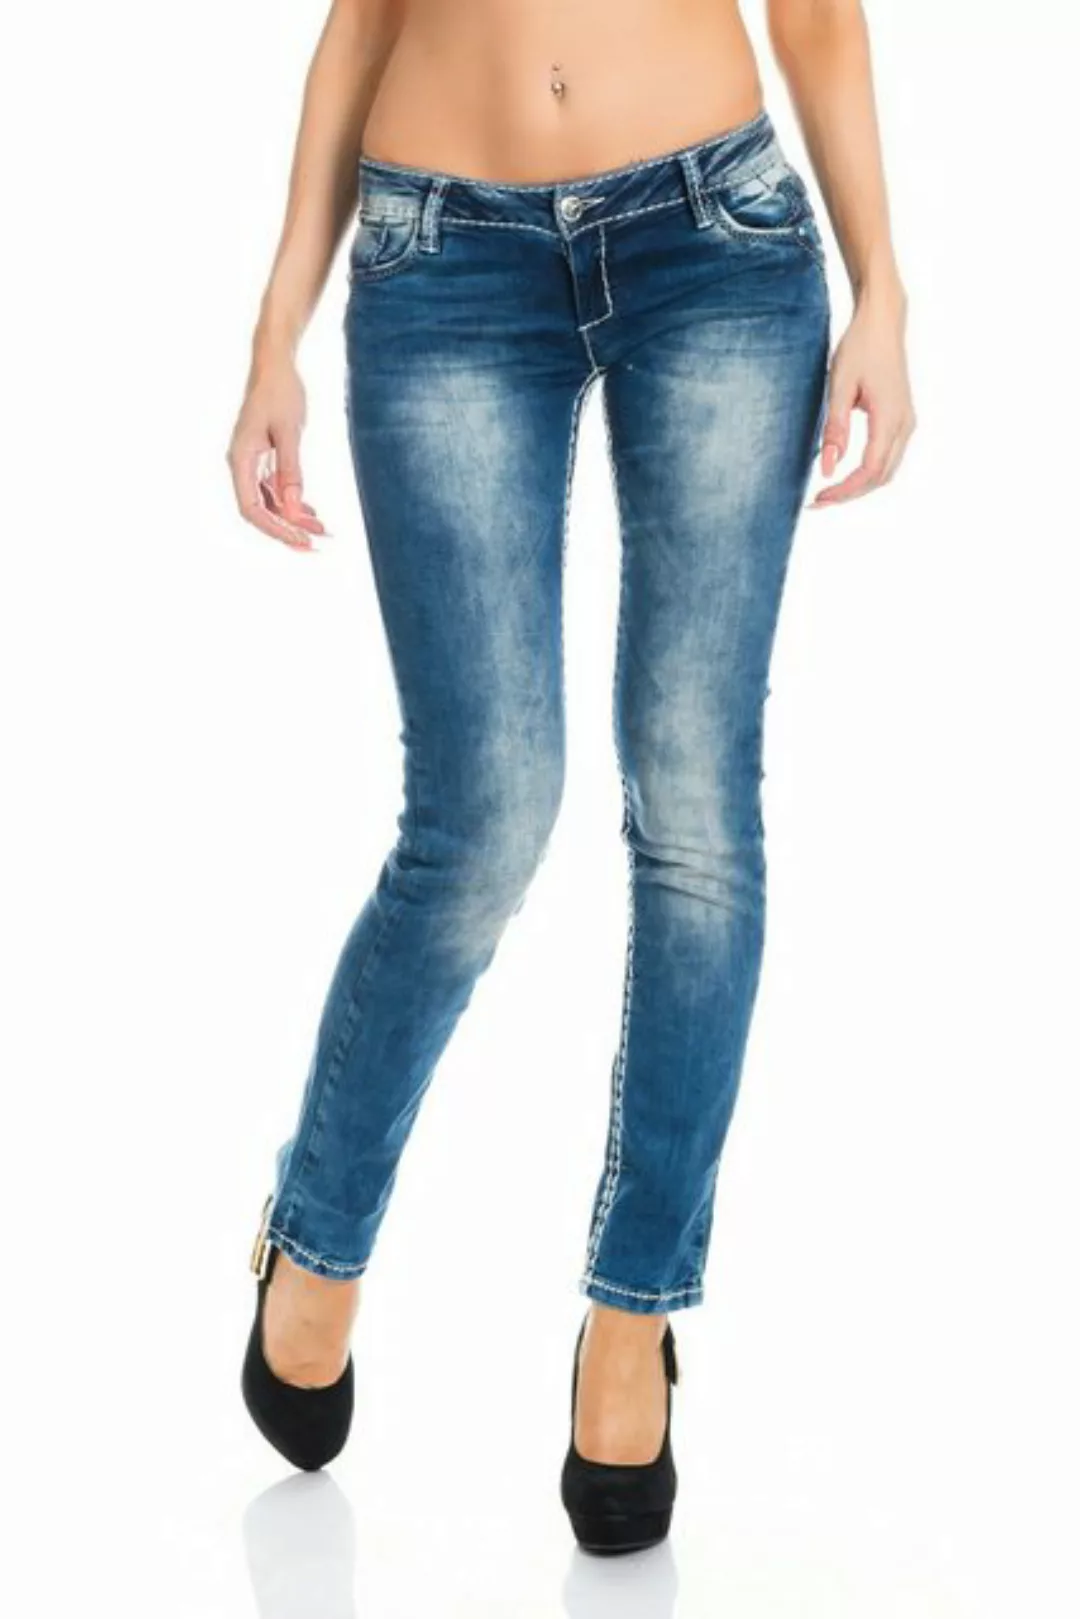 Cipo & Baxx Skinny-fit-Jeans Damen Jeans Hose mit dicken Kontrast Nähten Di günstig online kaufen